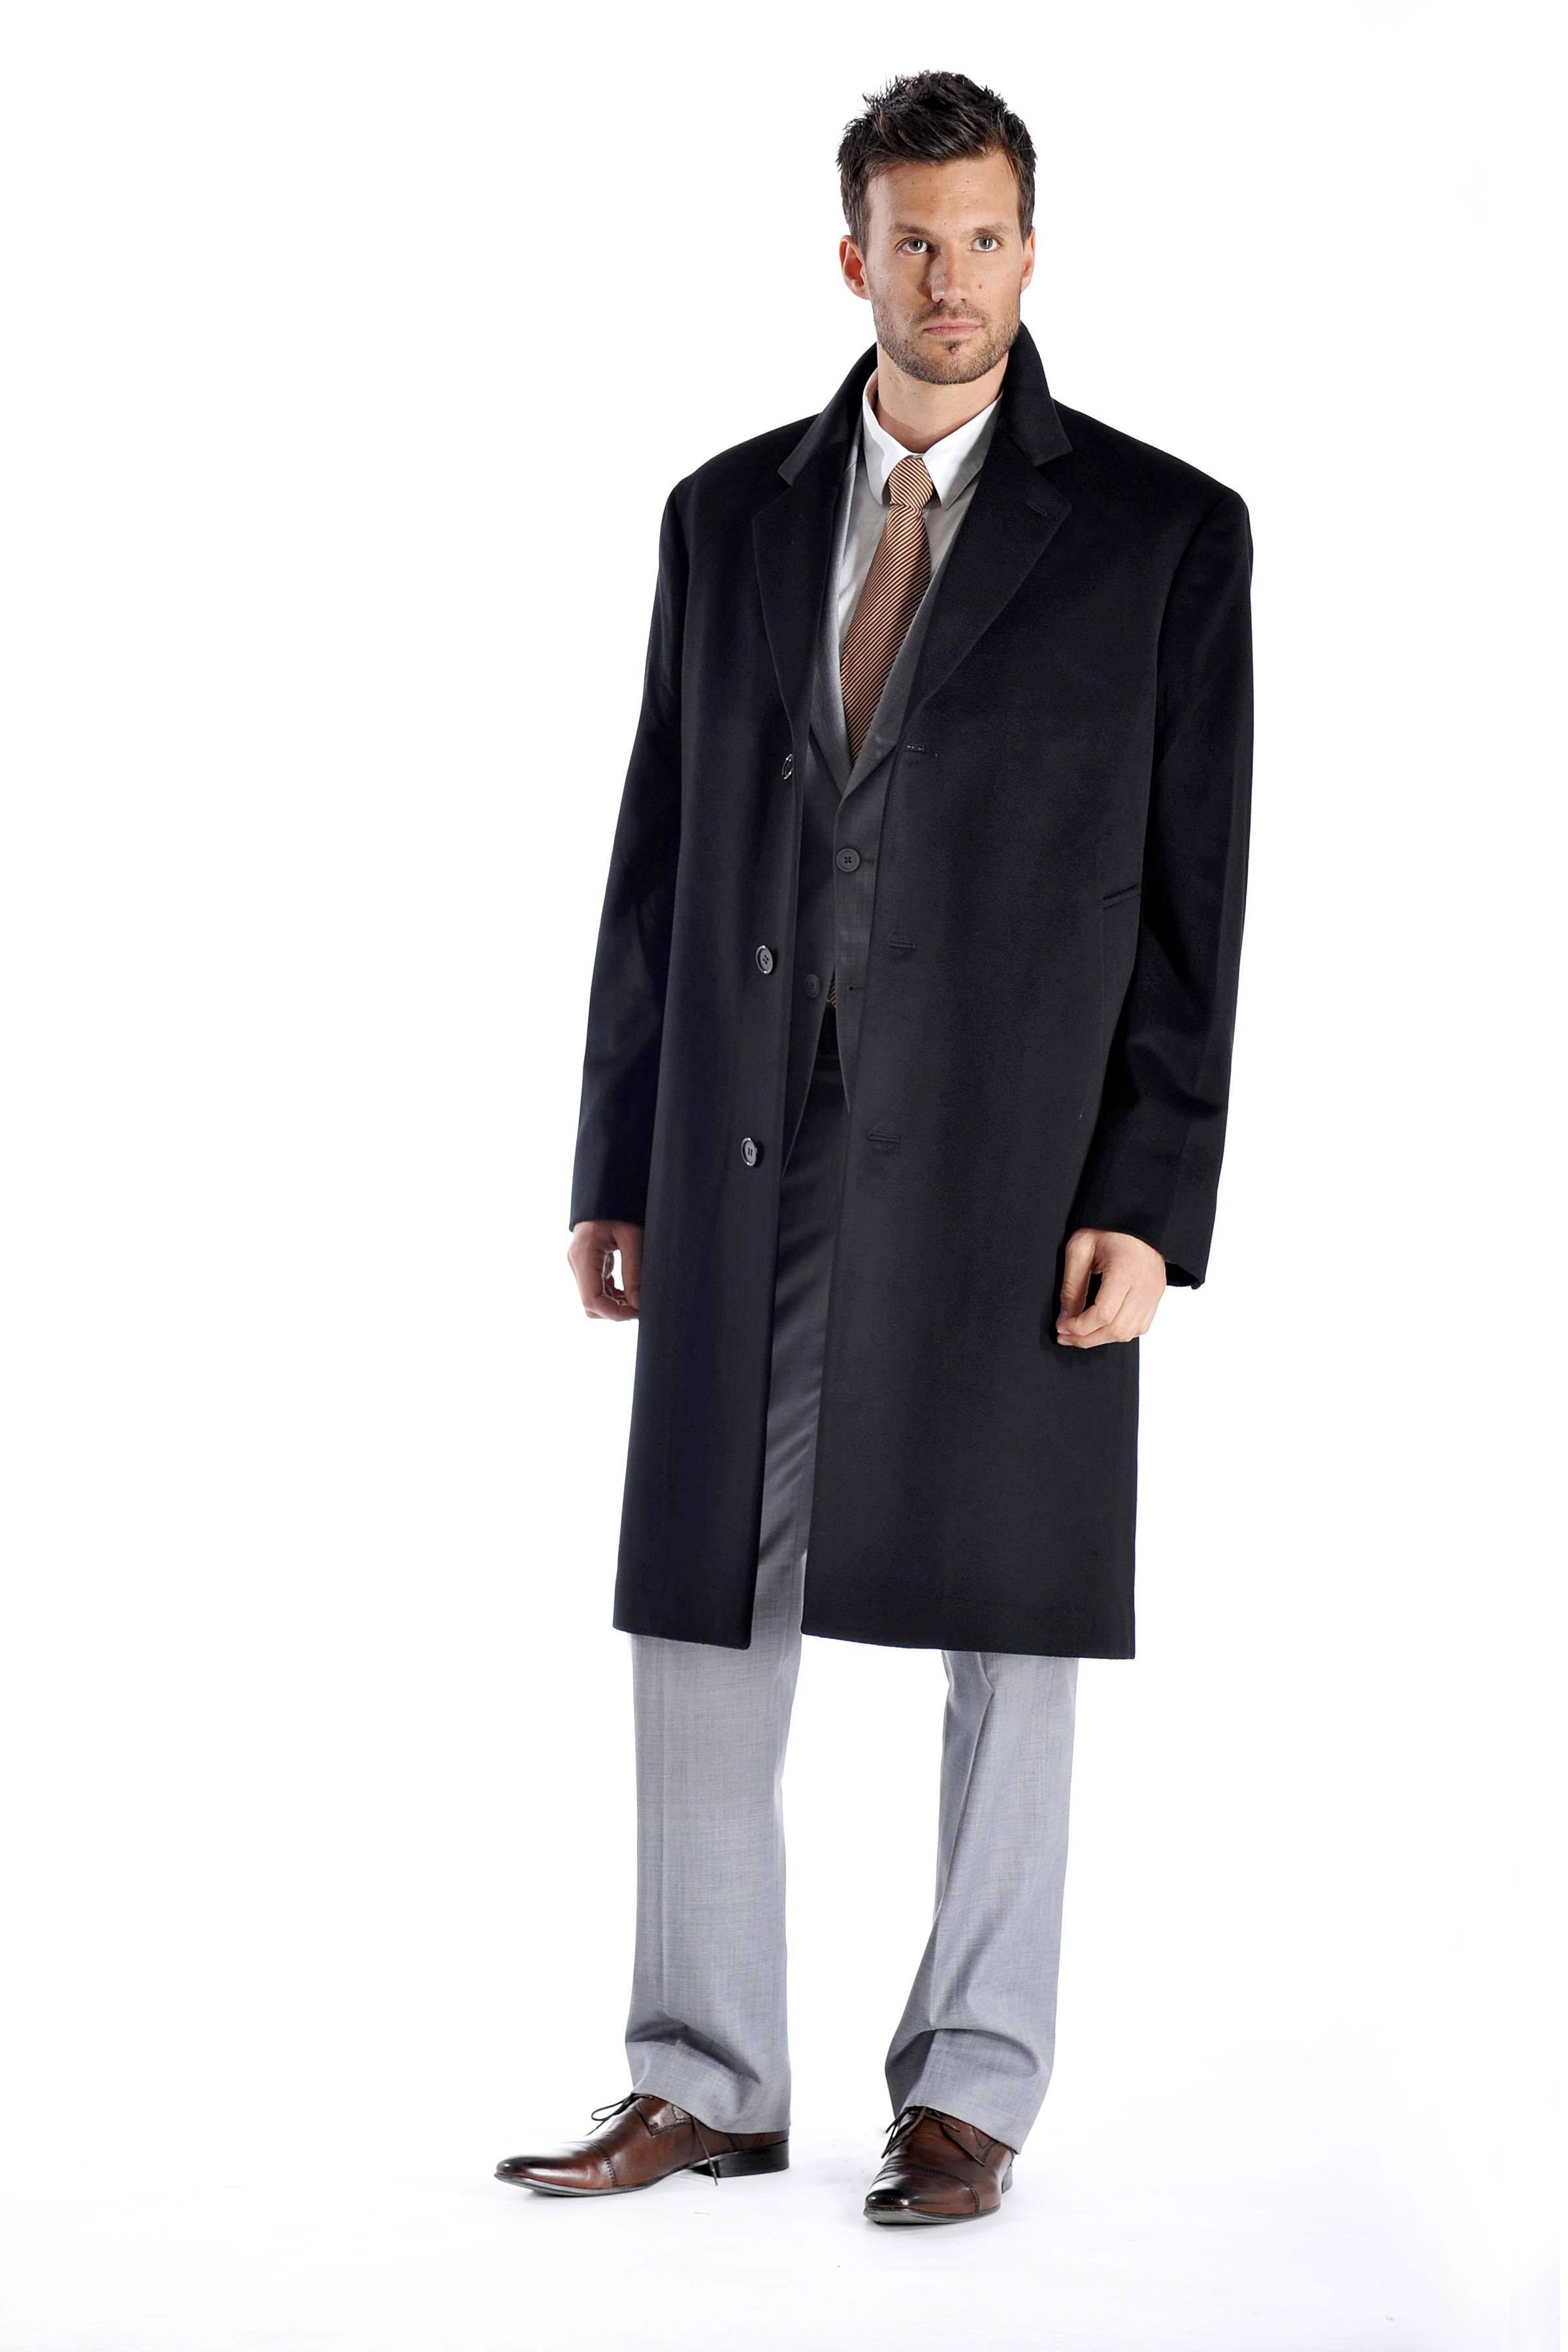 Pure Cashmere Knee Length Coat for Men (Black, 40)